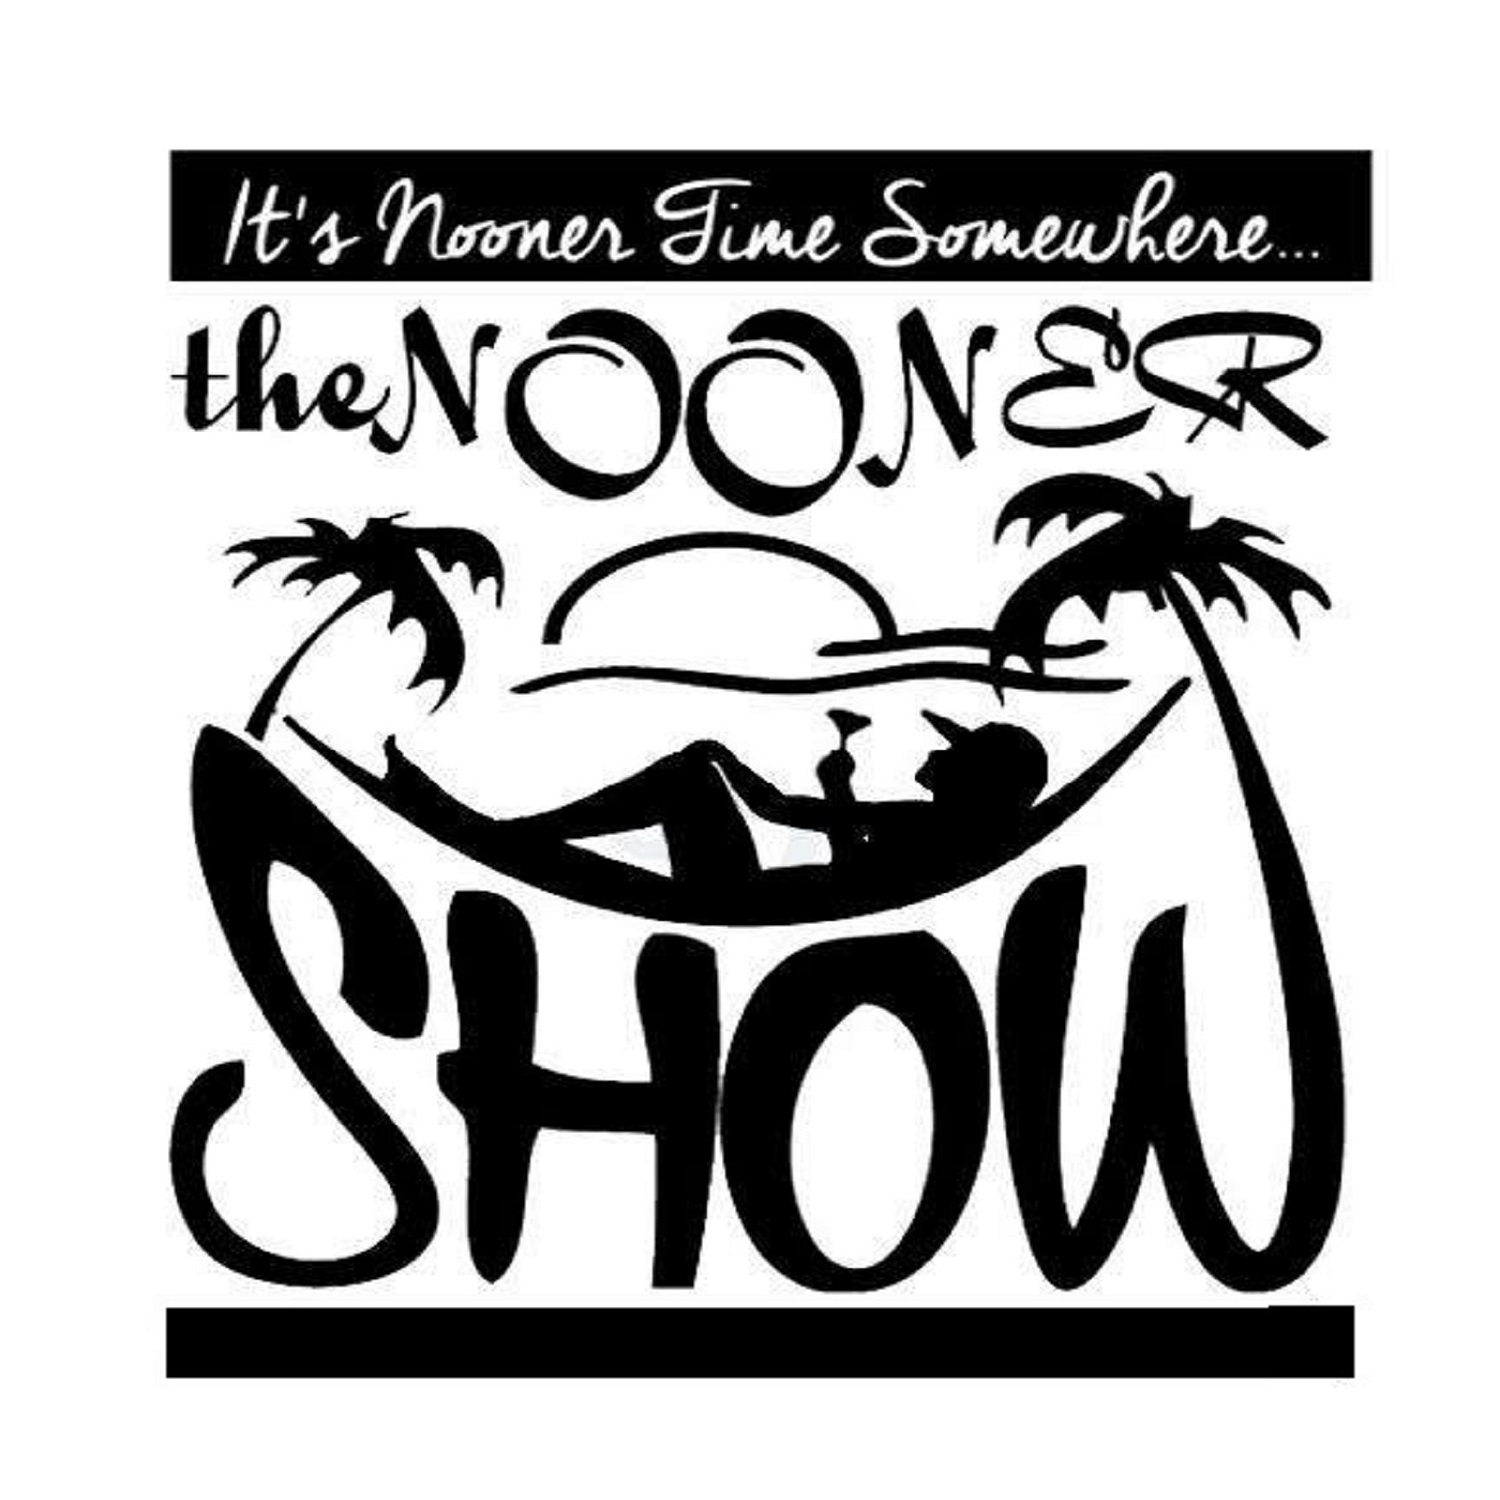 The Nooner Show – Episode 222